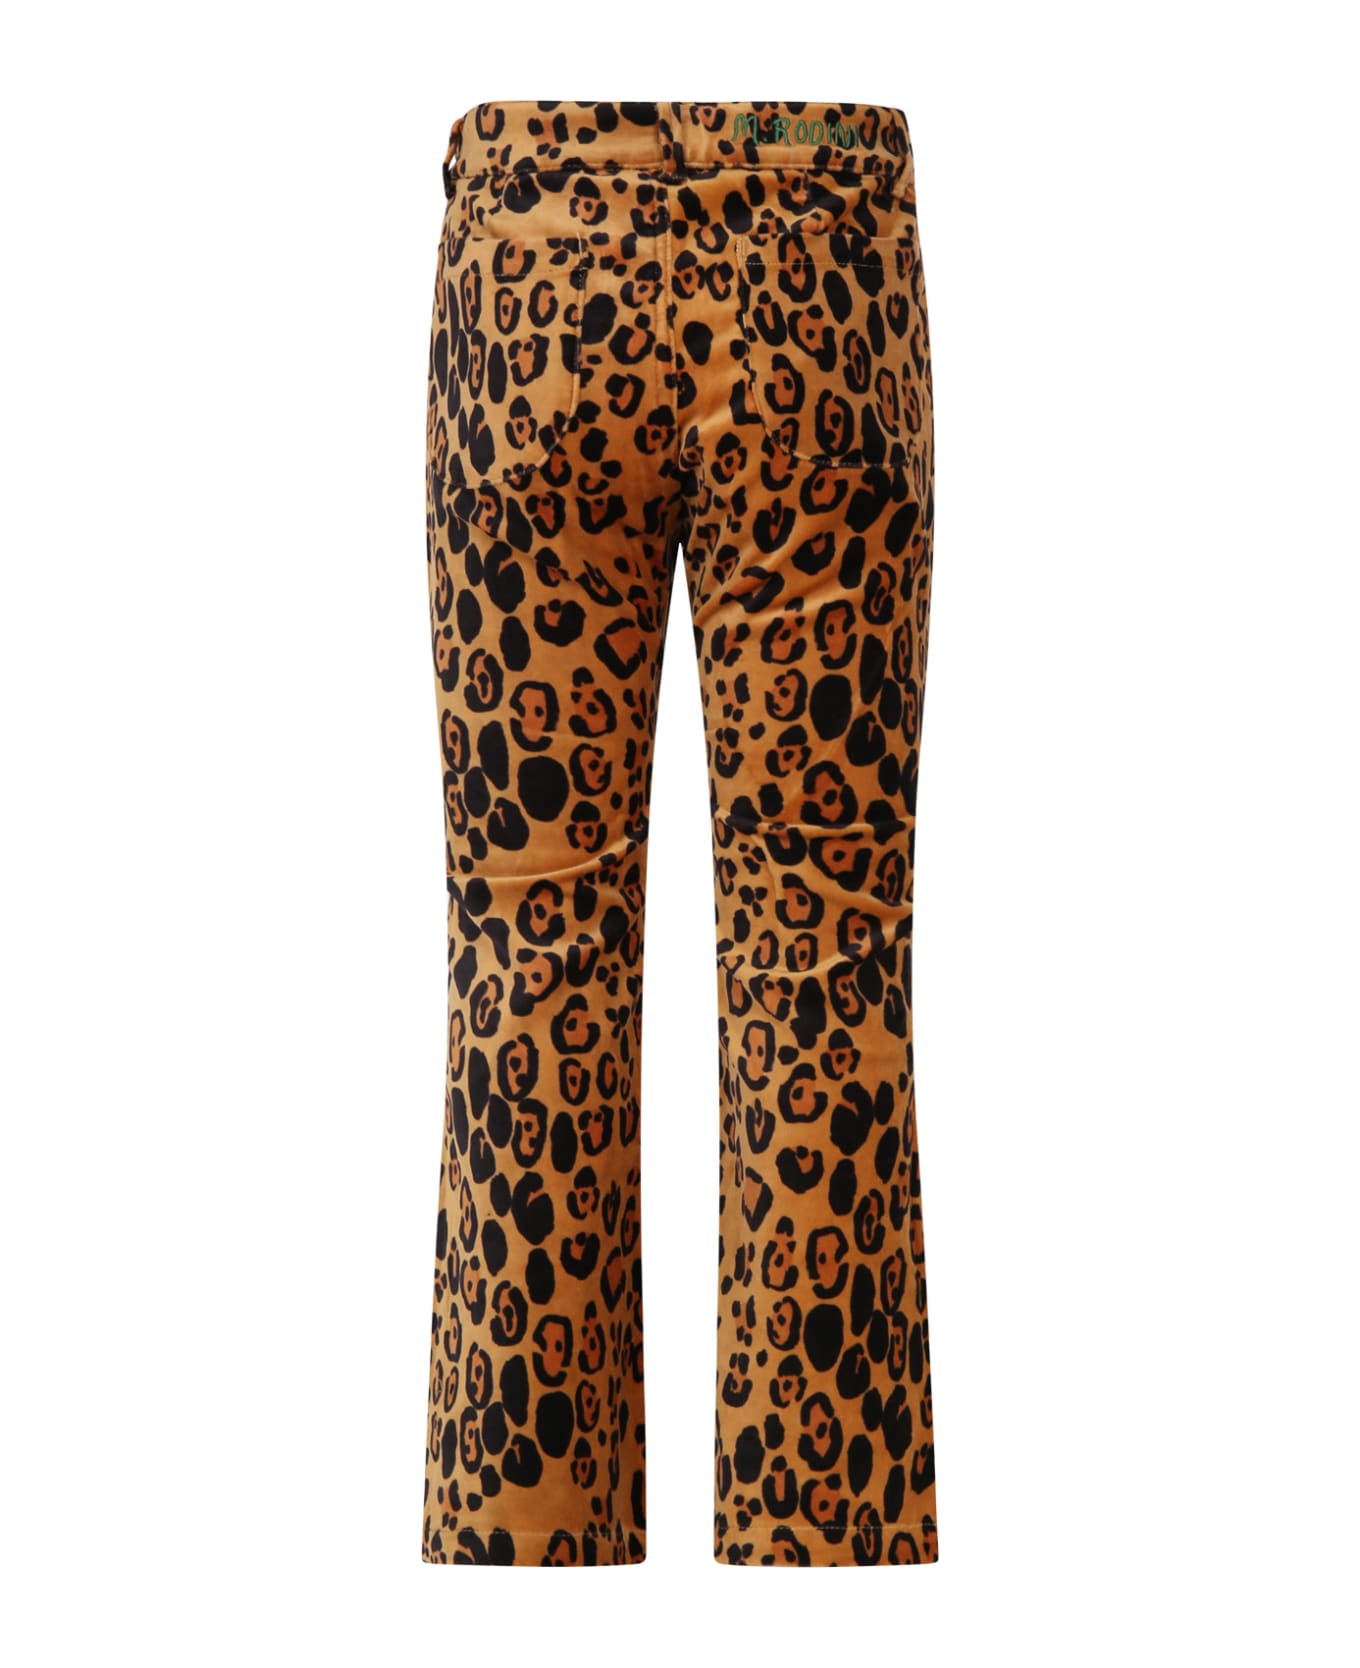 Mini Rodini Brown Trousers For Girl With Lepard Print - Yellow ボトムス